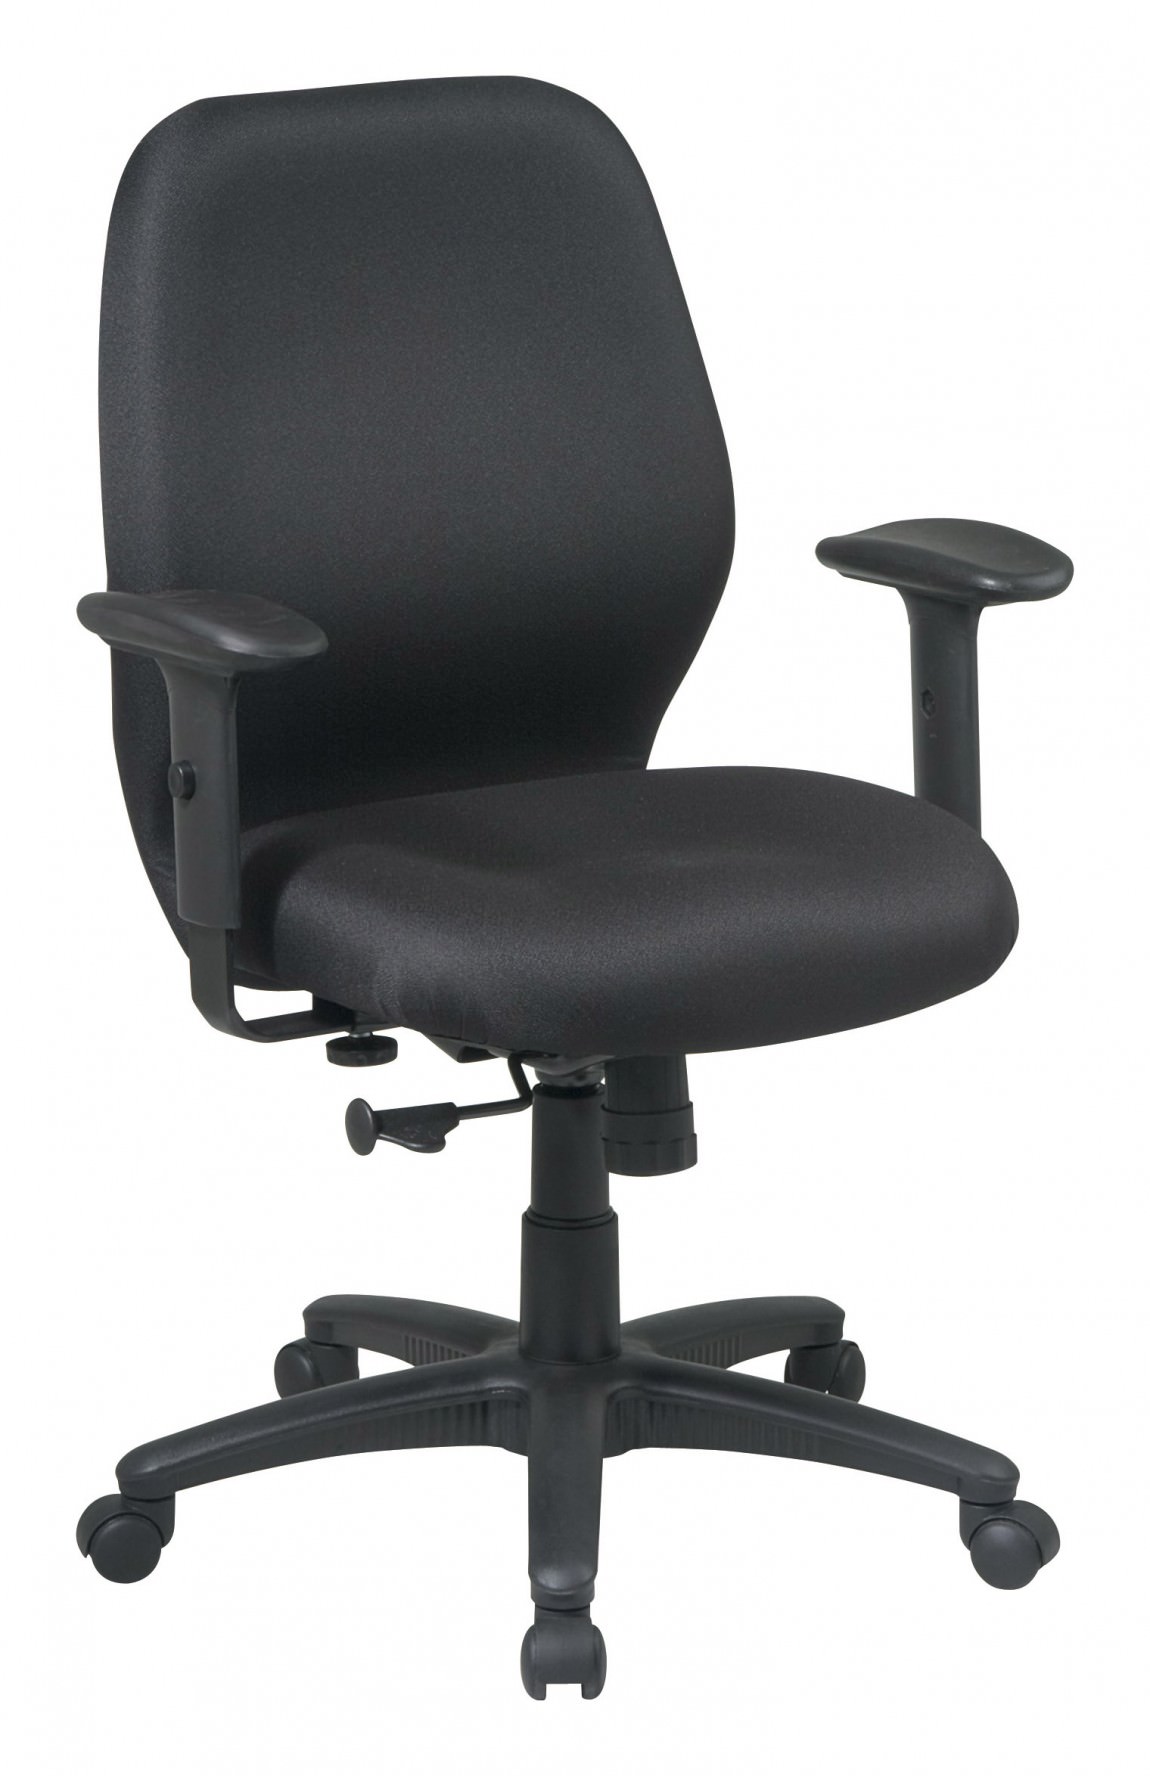 https://madisonliquidators.com/images/p/1150/25975-mid-back-padded-office-chair-1.jpg